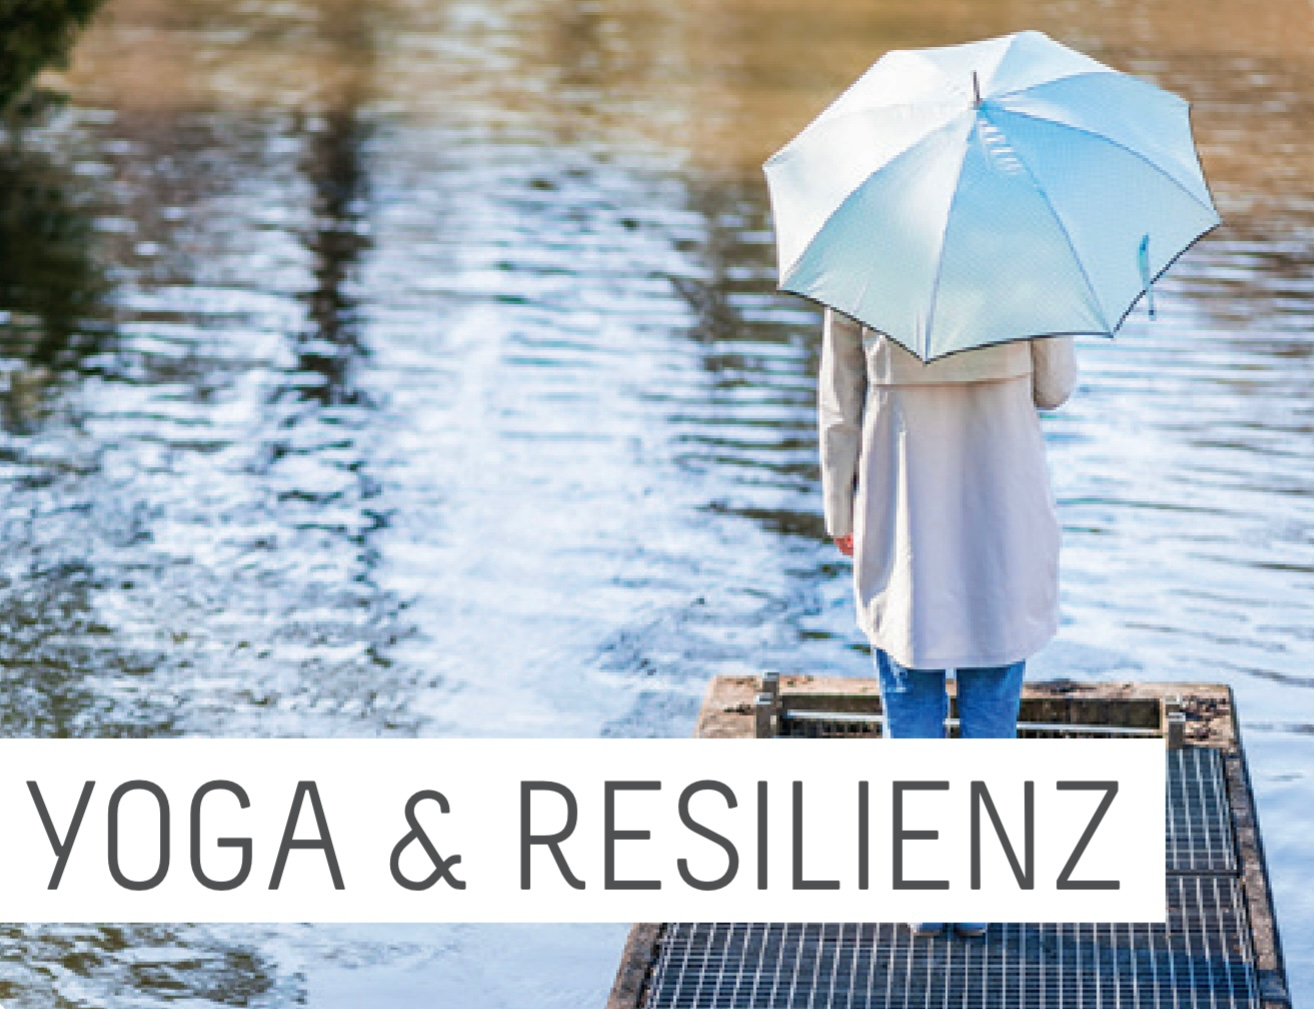 Yoga & Resilienz